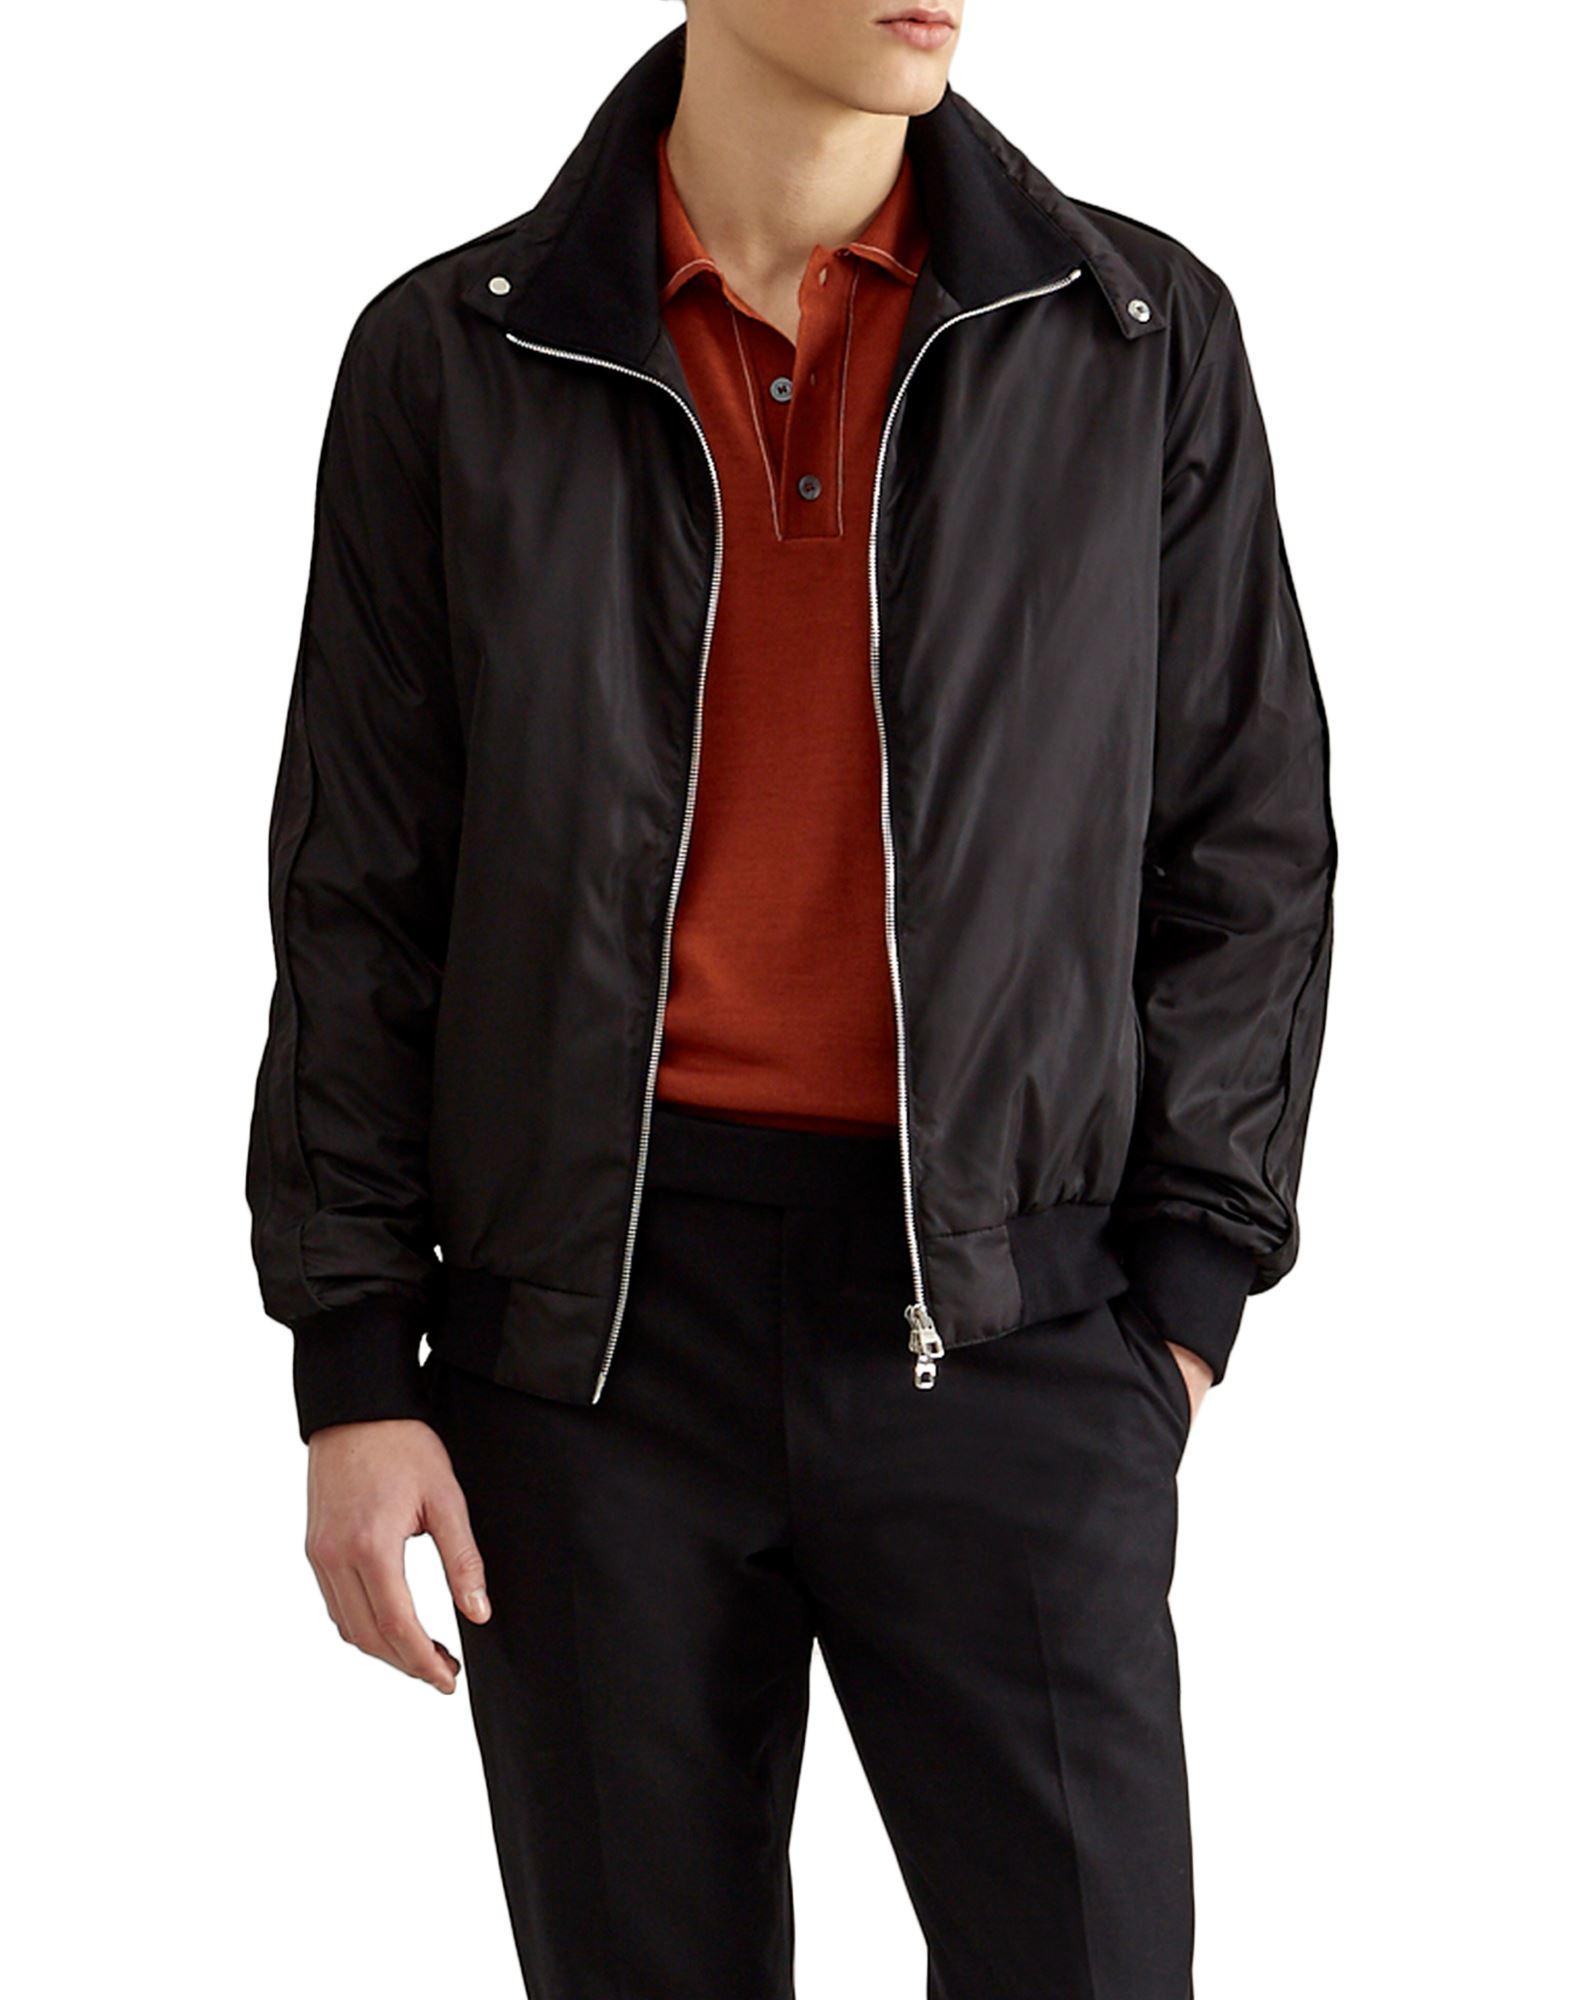 Dunhill Jacket in Black for Men - Lyst